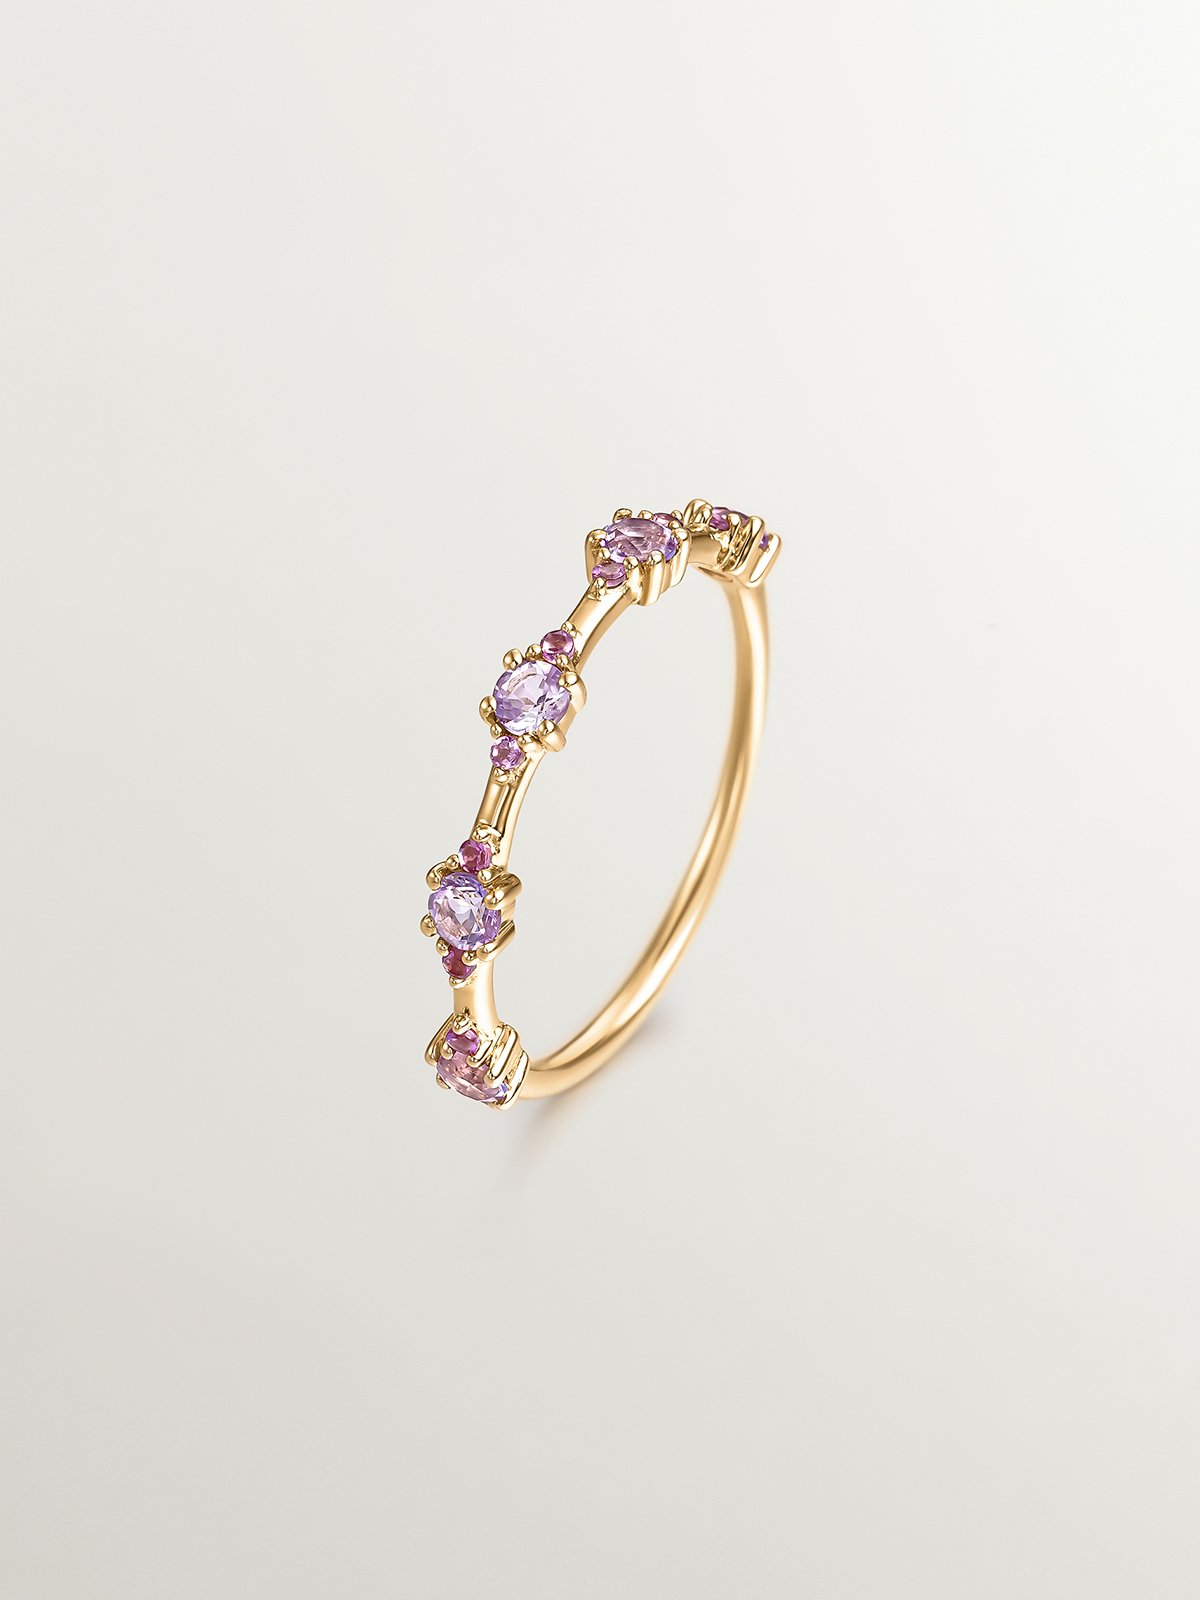 925 silver ring with purple tanzanita, white diamonds and white enamel